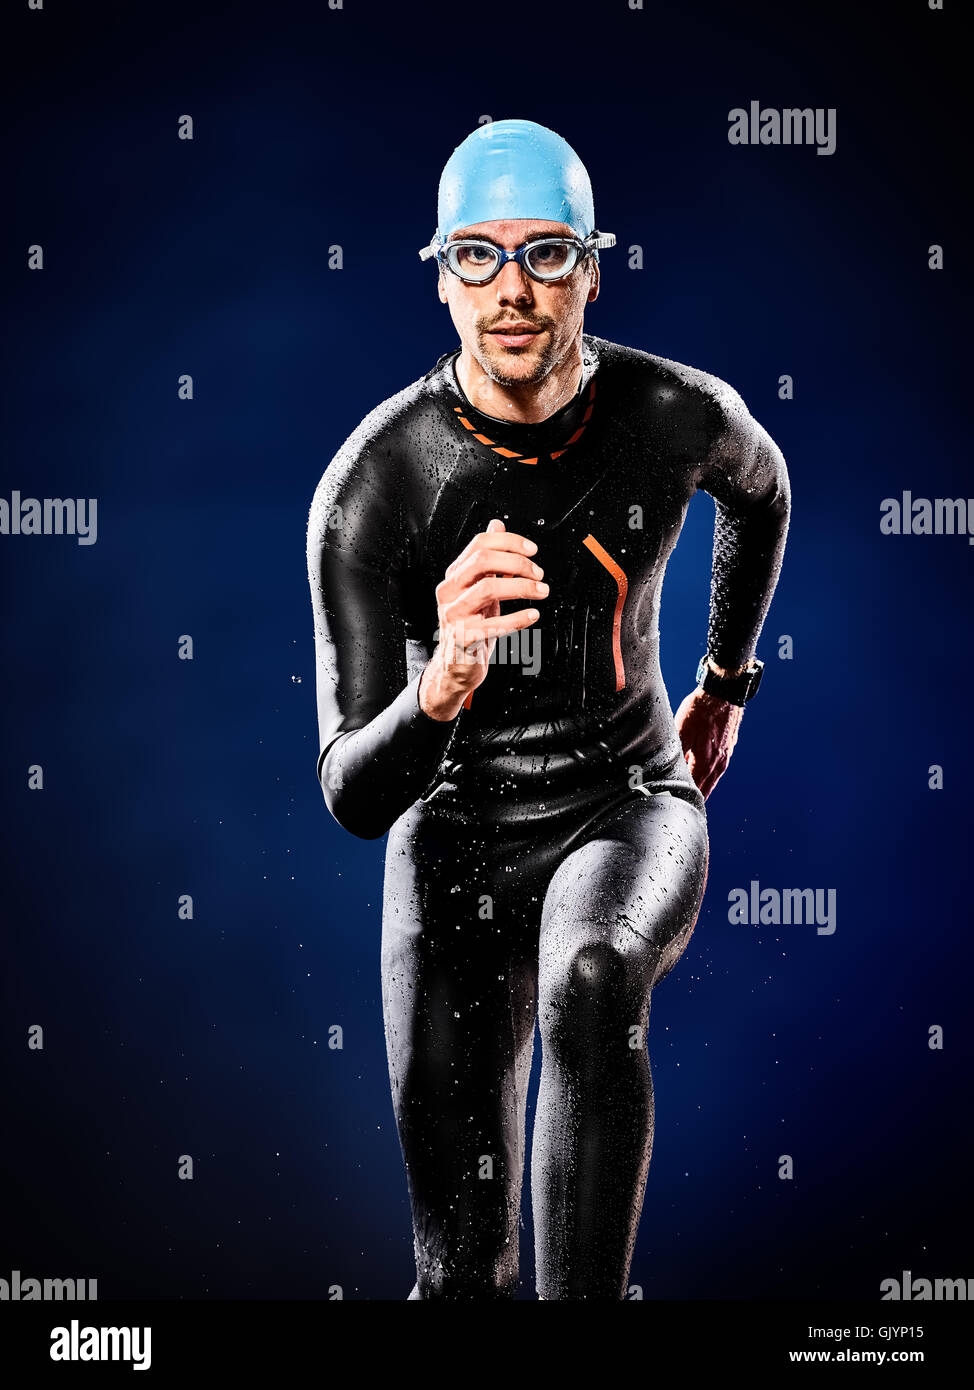 Un uomo caucasico triathlon Ironman nuotatore nuoto isolato Foto Stock